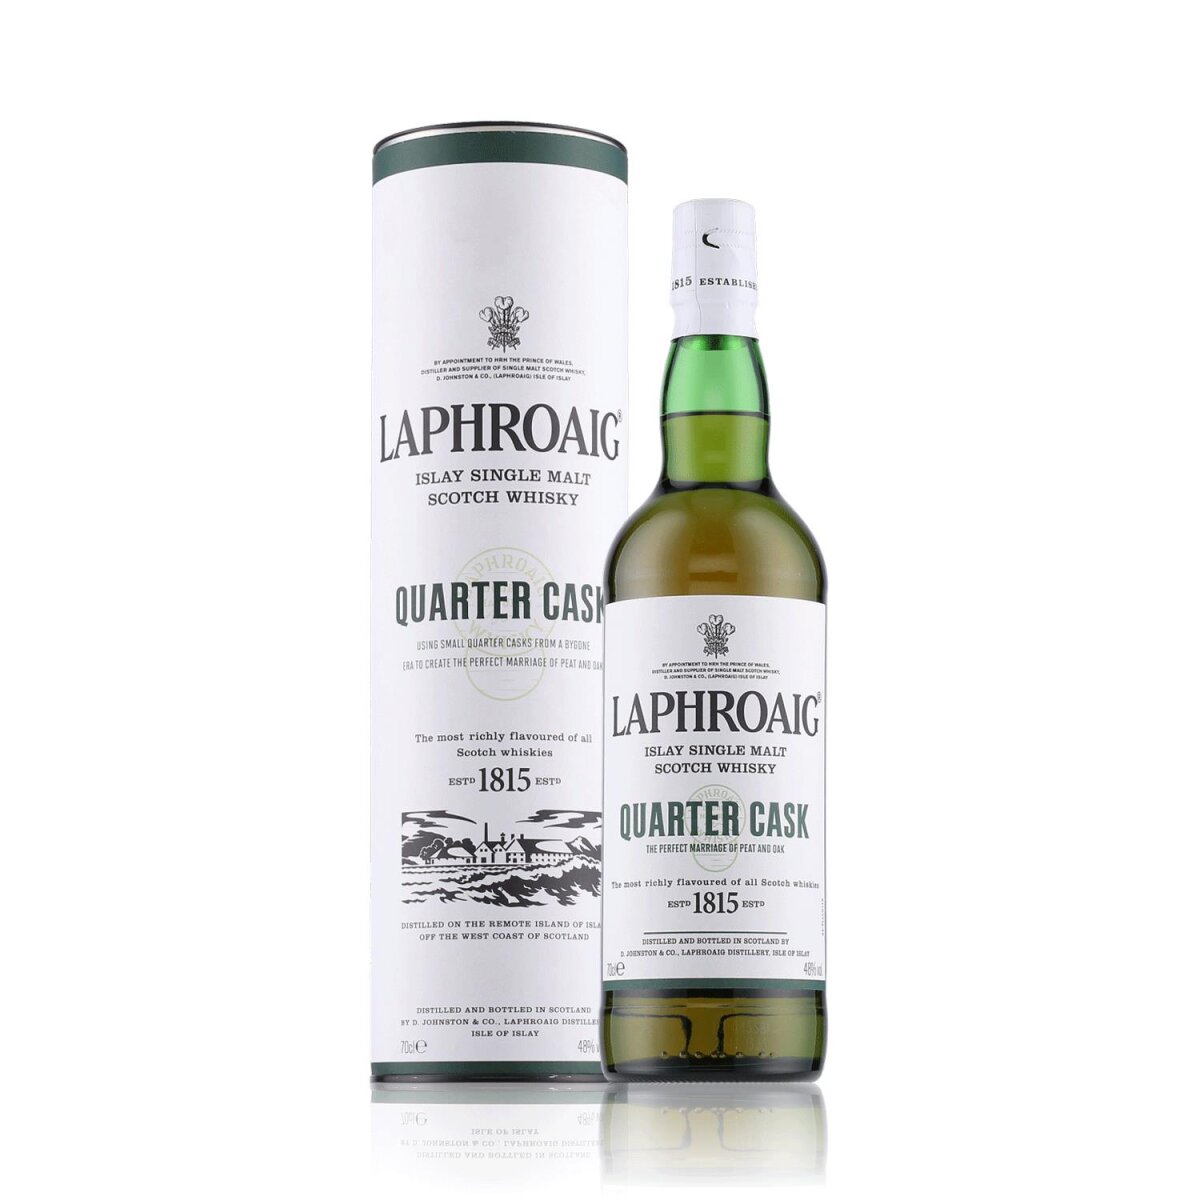 38,69 in Whisky 0,7l Vol. 48% Cask Quarter € Laphroaig Geschenkbox,